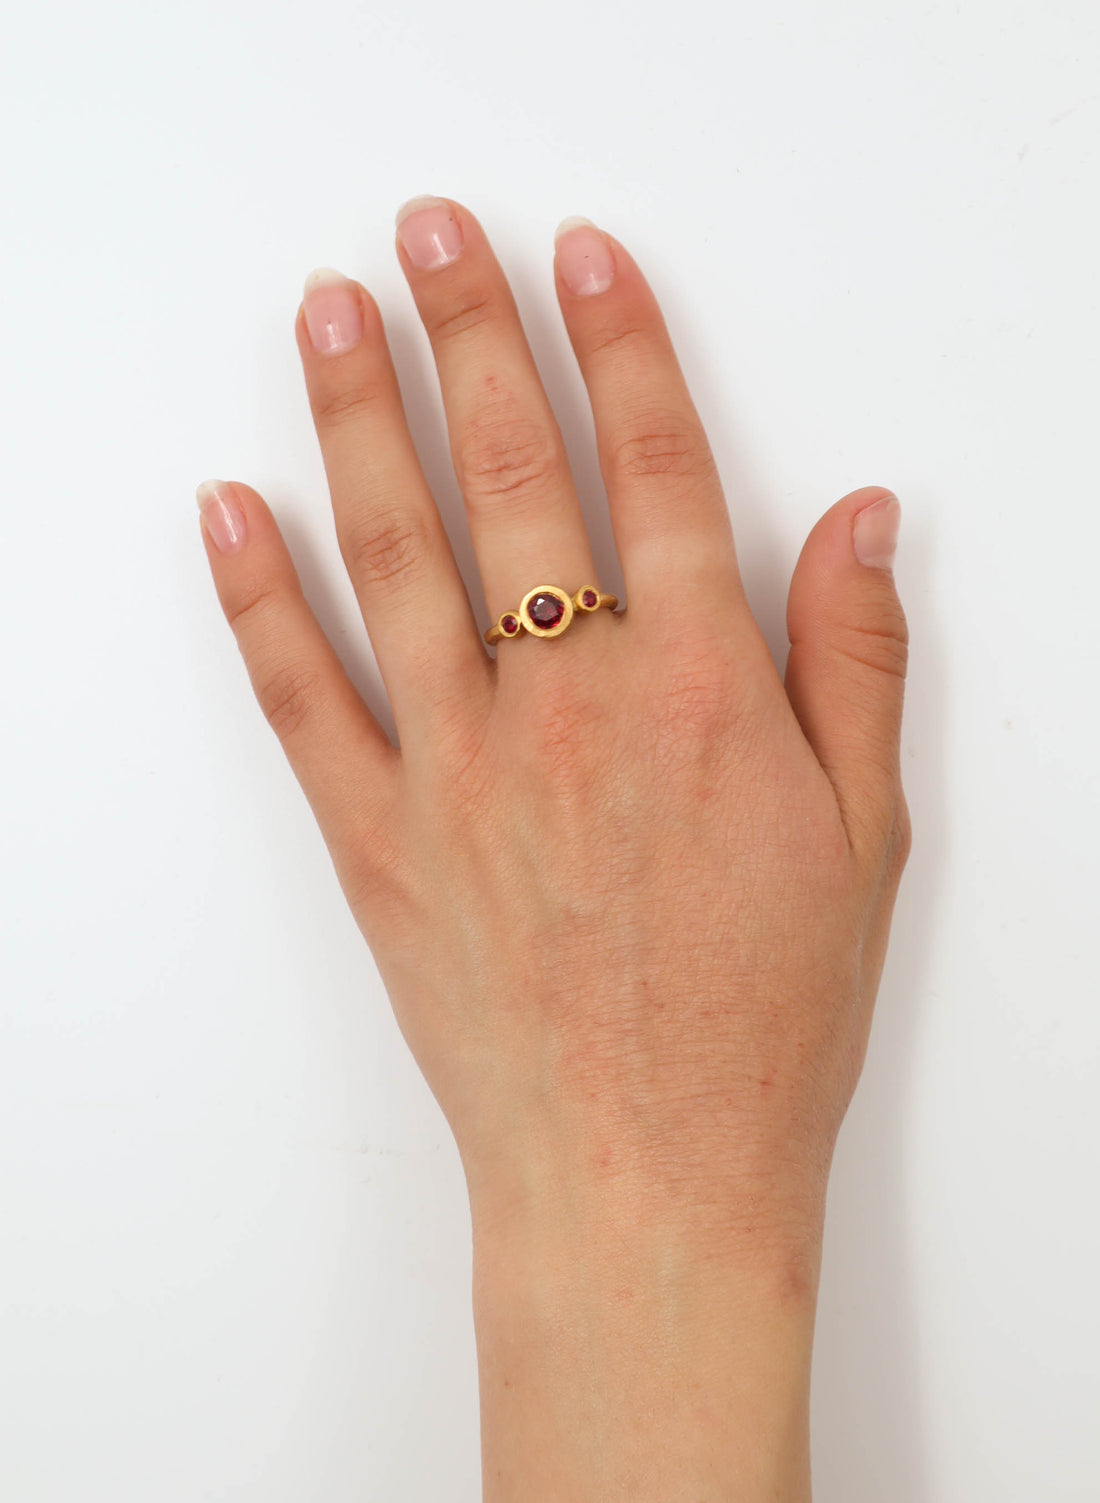 Chloris Ring - Ruby + 18ct Gold